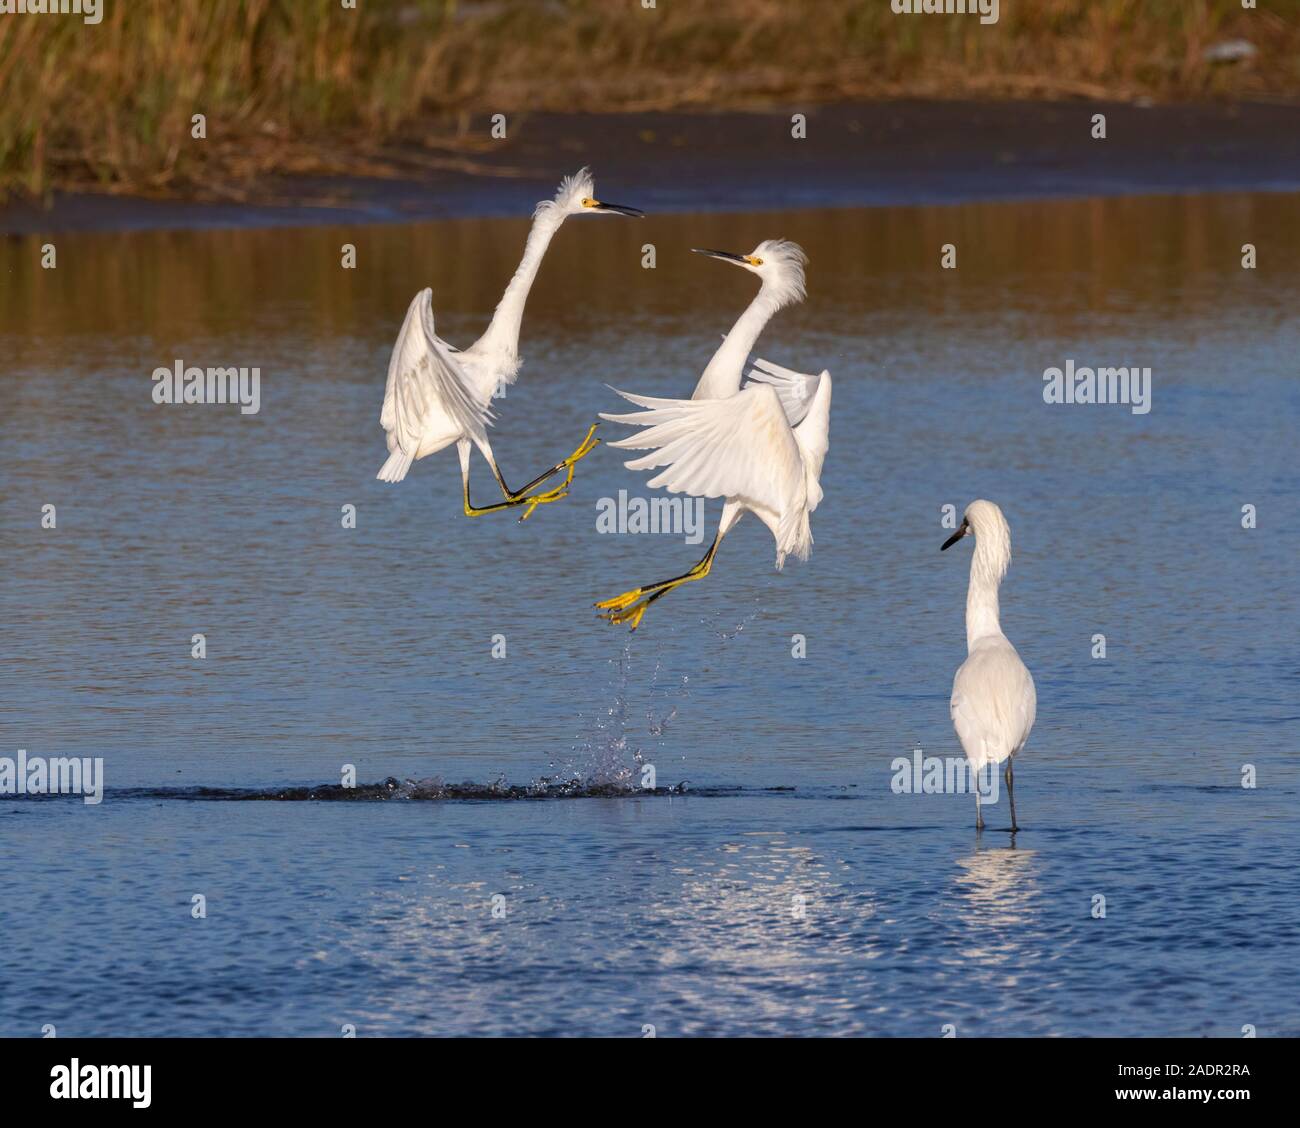 Snowy egrets (Egretta thula) fighting in the air, Galveston, Texas, USA Stock Photo